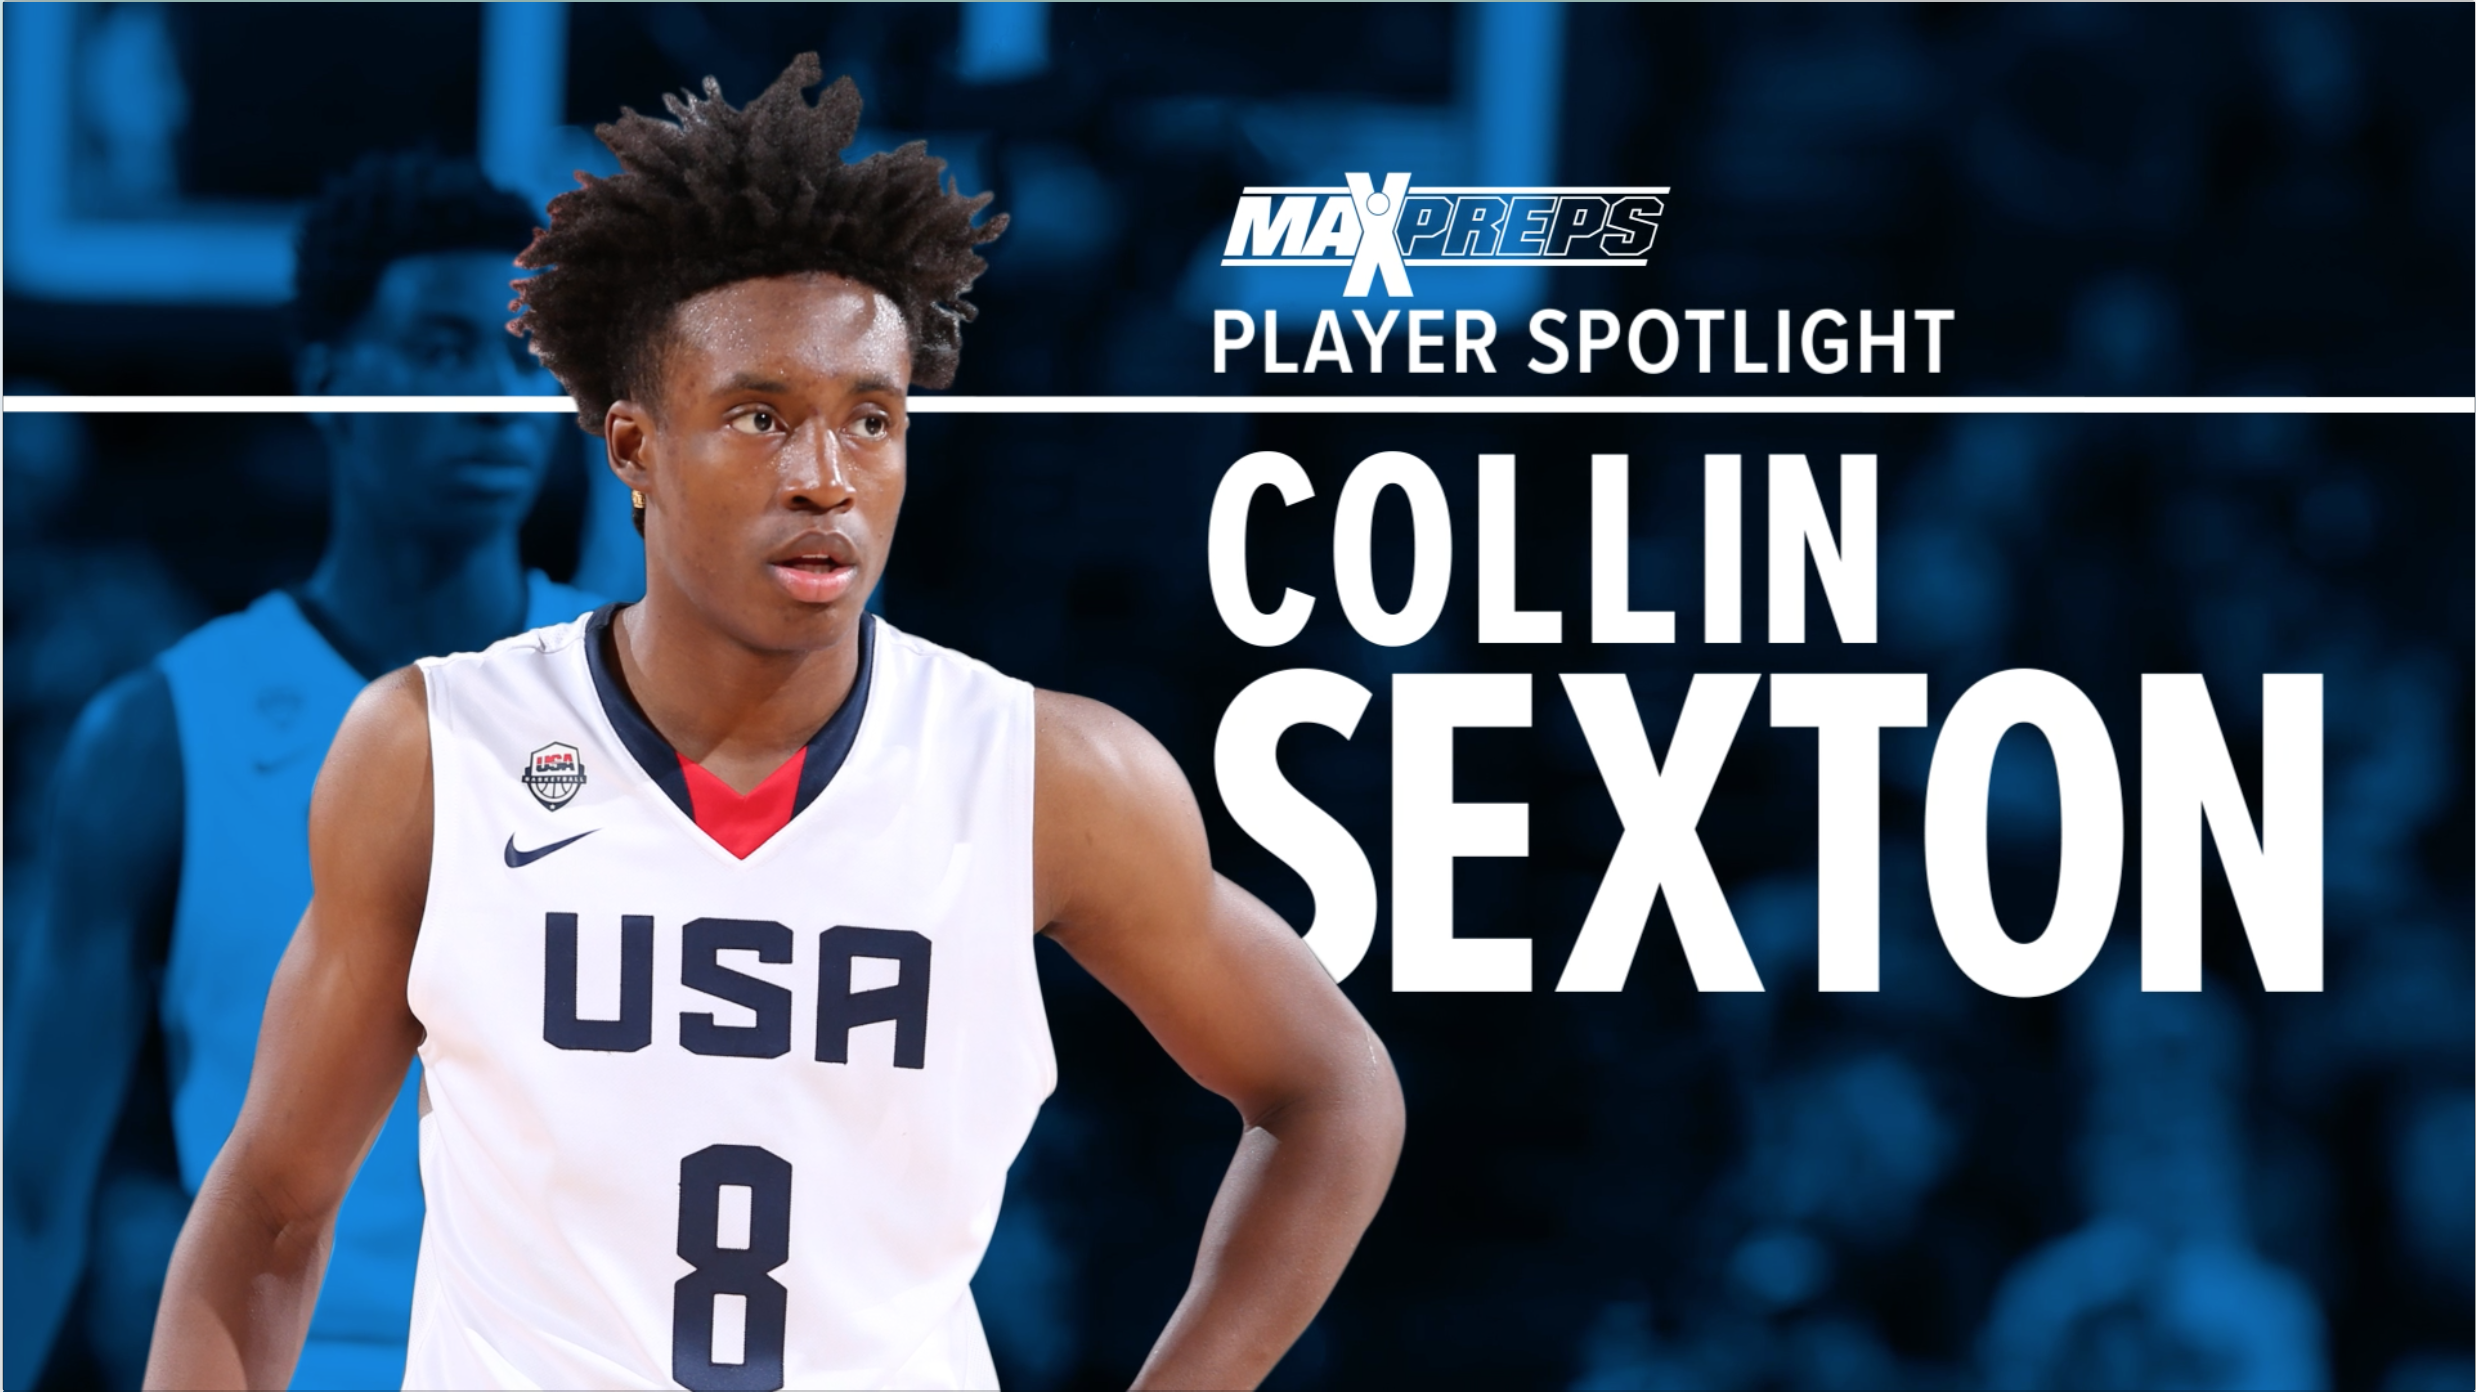 Collin Sexton FULL HIGHLIGHTS From the 2016-17 High School Season